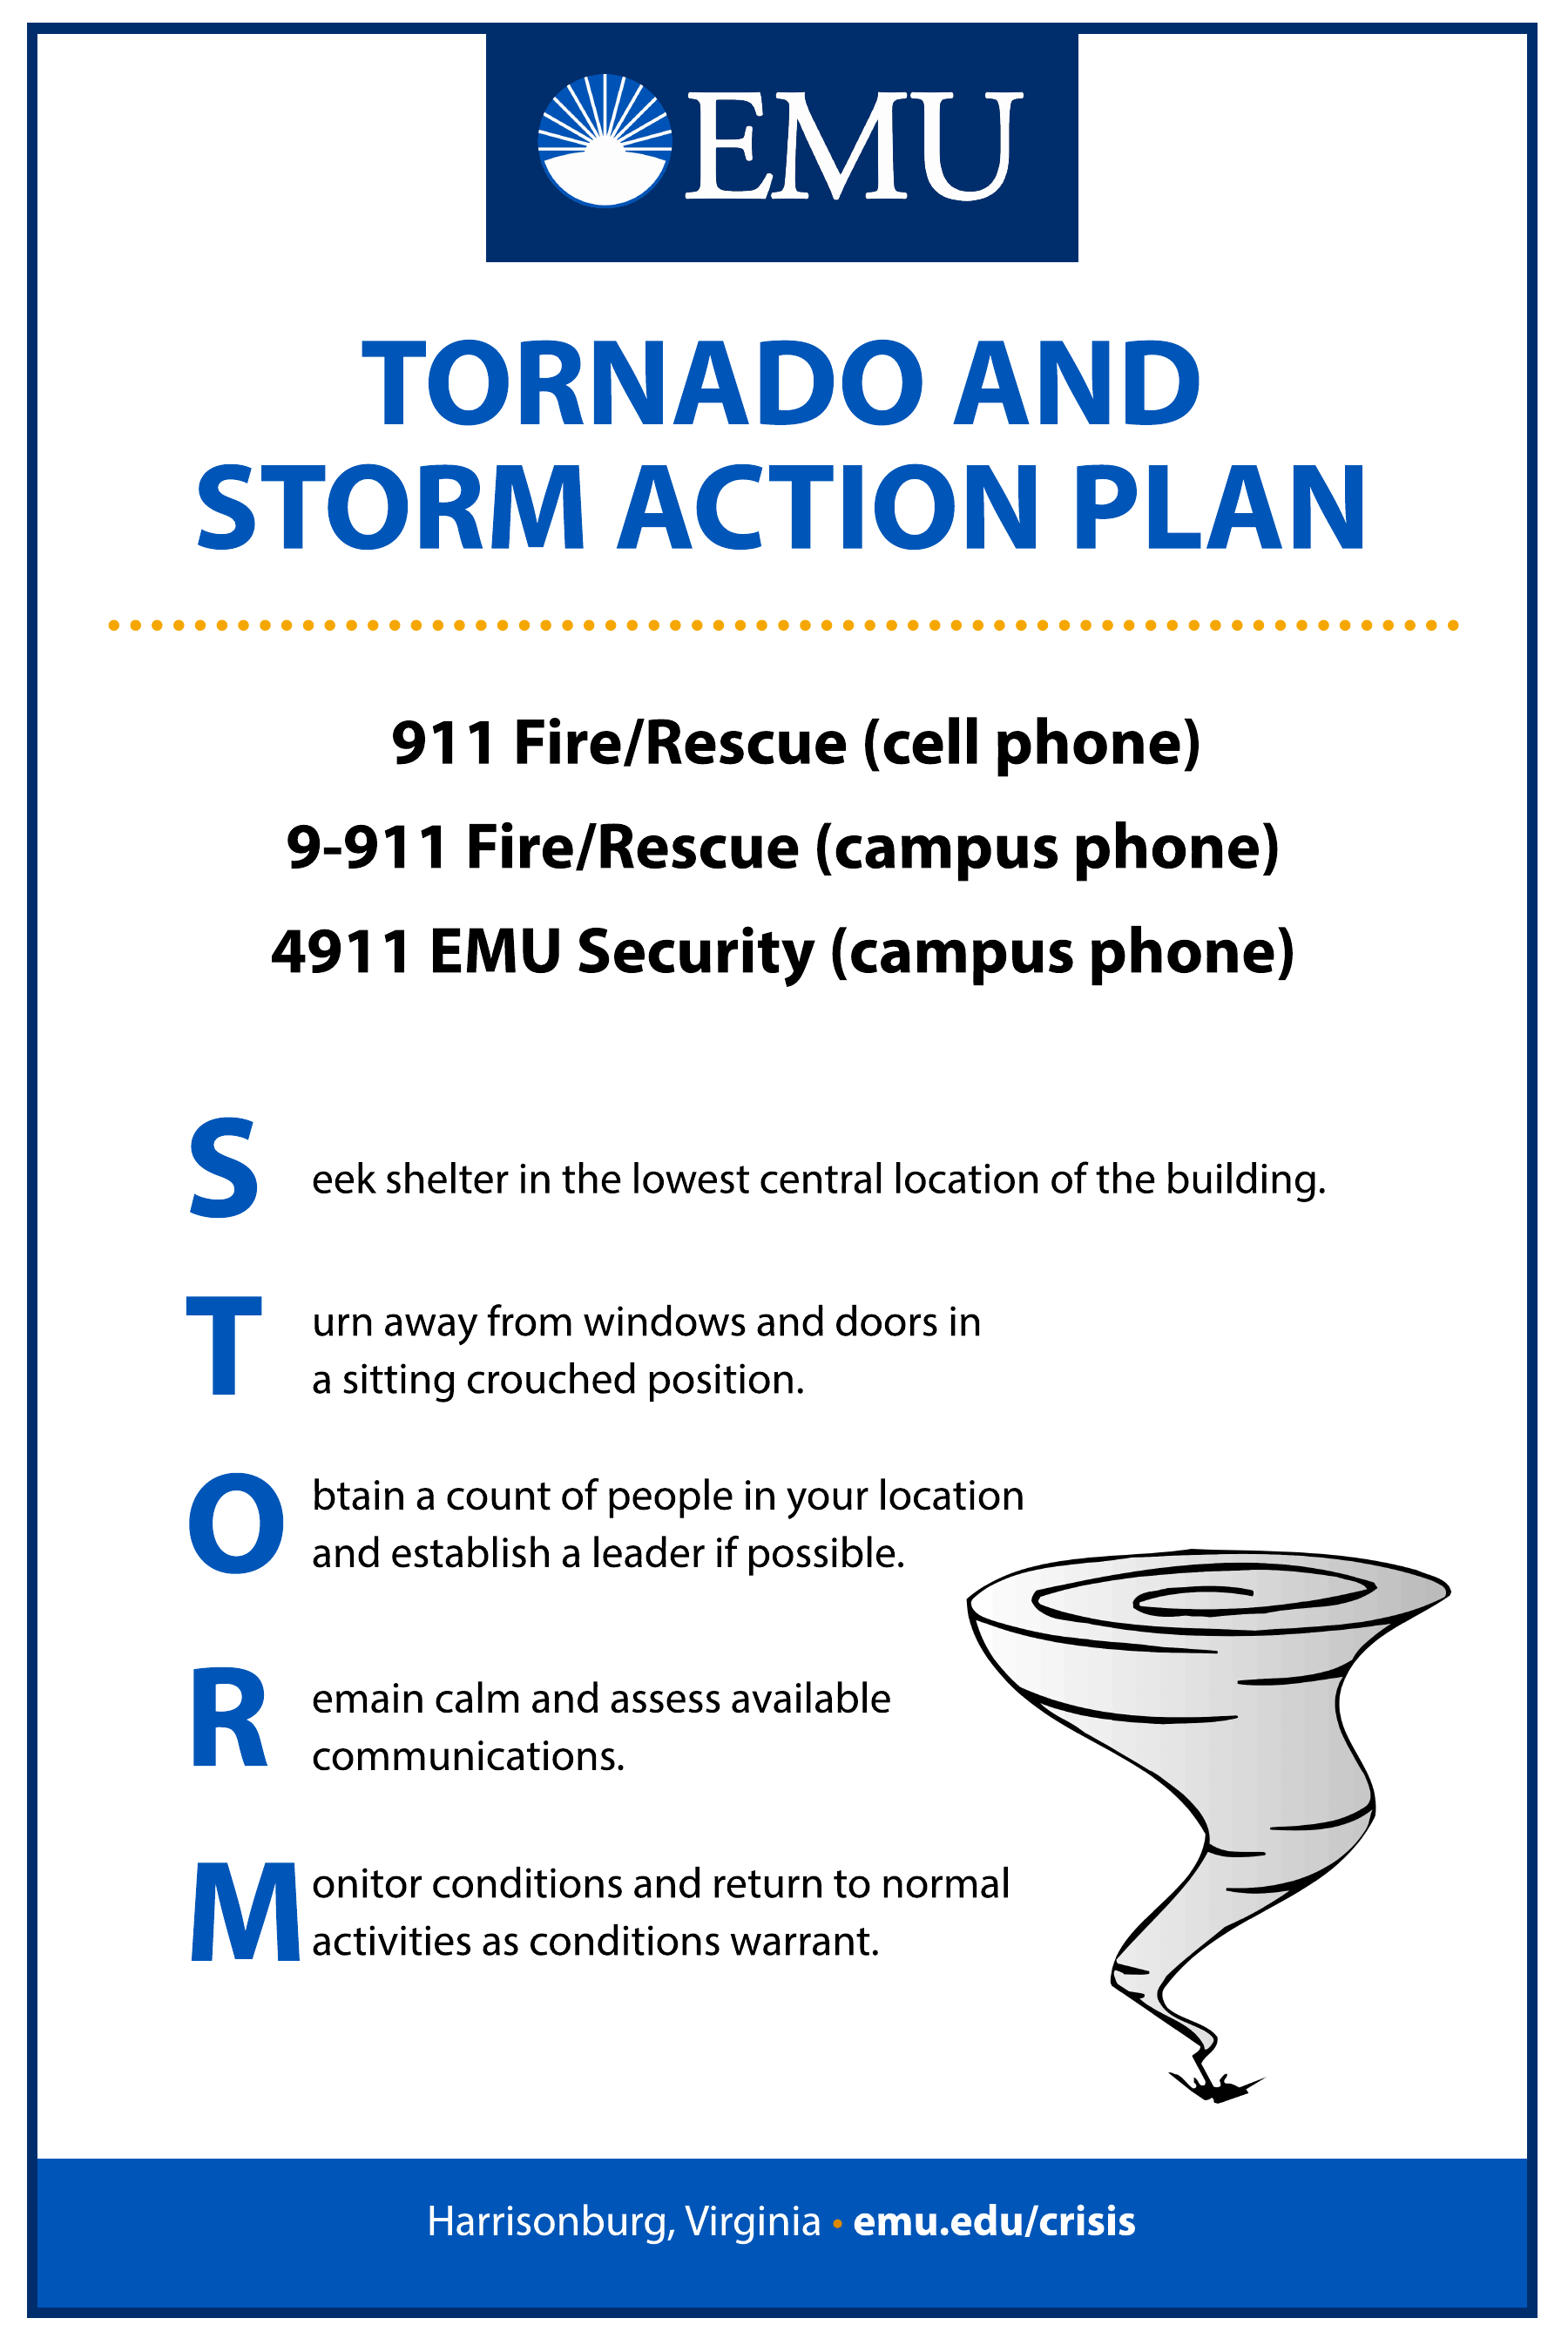 EMU Tornado Response Plan